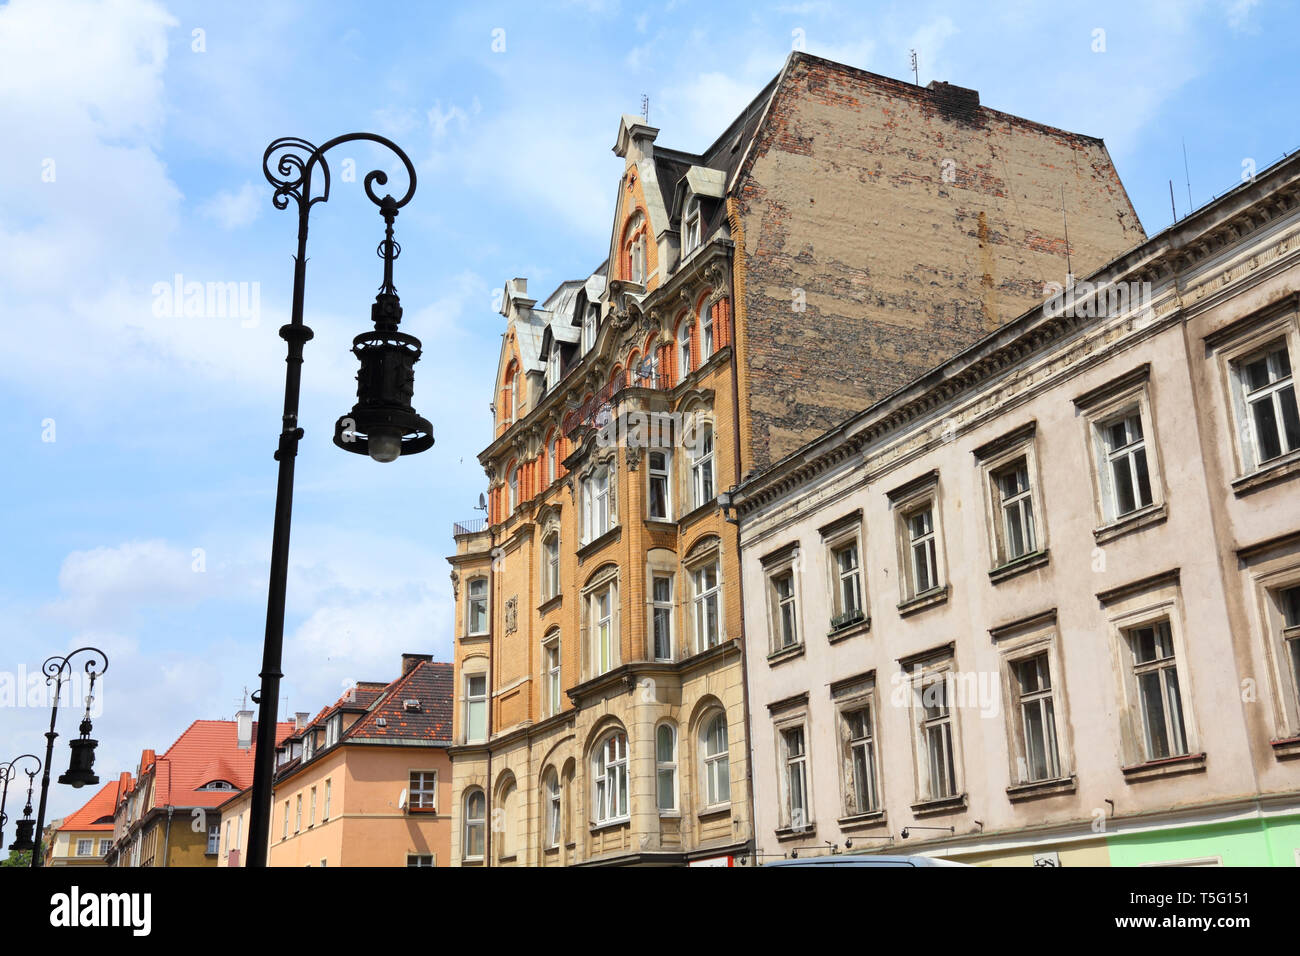 Poznan, Poland - city architecture. Greater Poland province (Wielkopolska). Residential architecture. Stock Photo